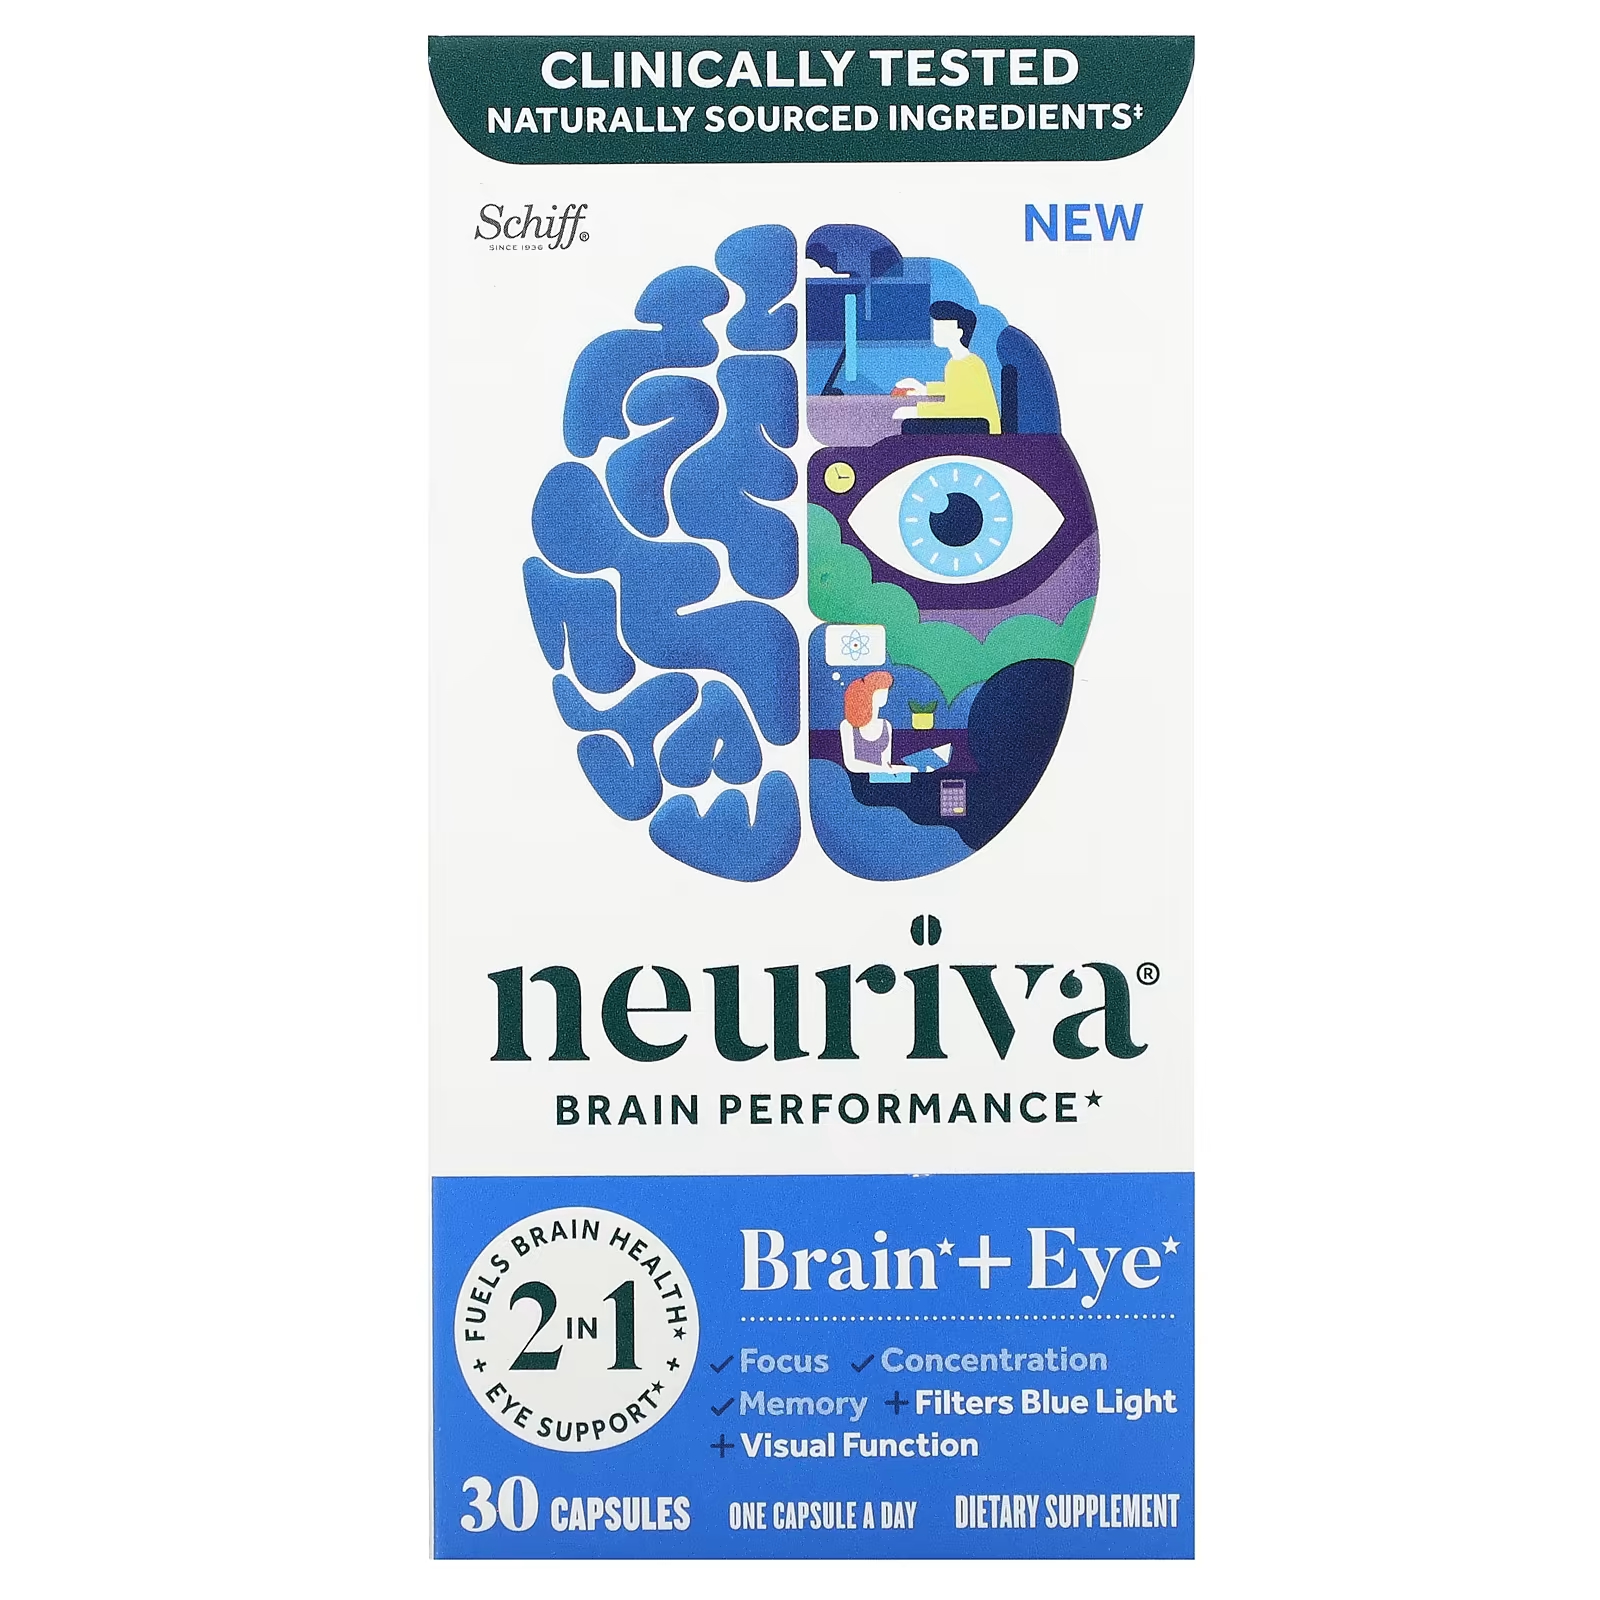 Мультивитамины Schiff Neuriva Brain Performance, 30 капсул schiff neuriva brain performance plus 30 capsules